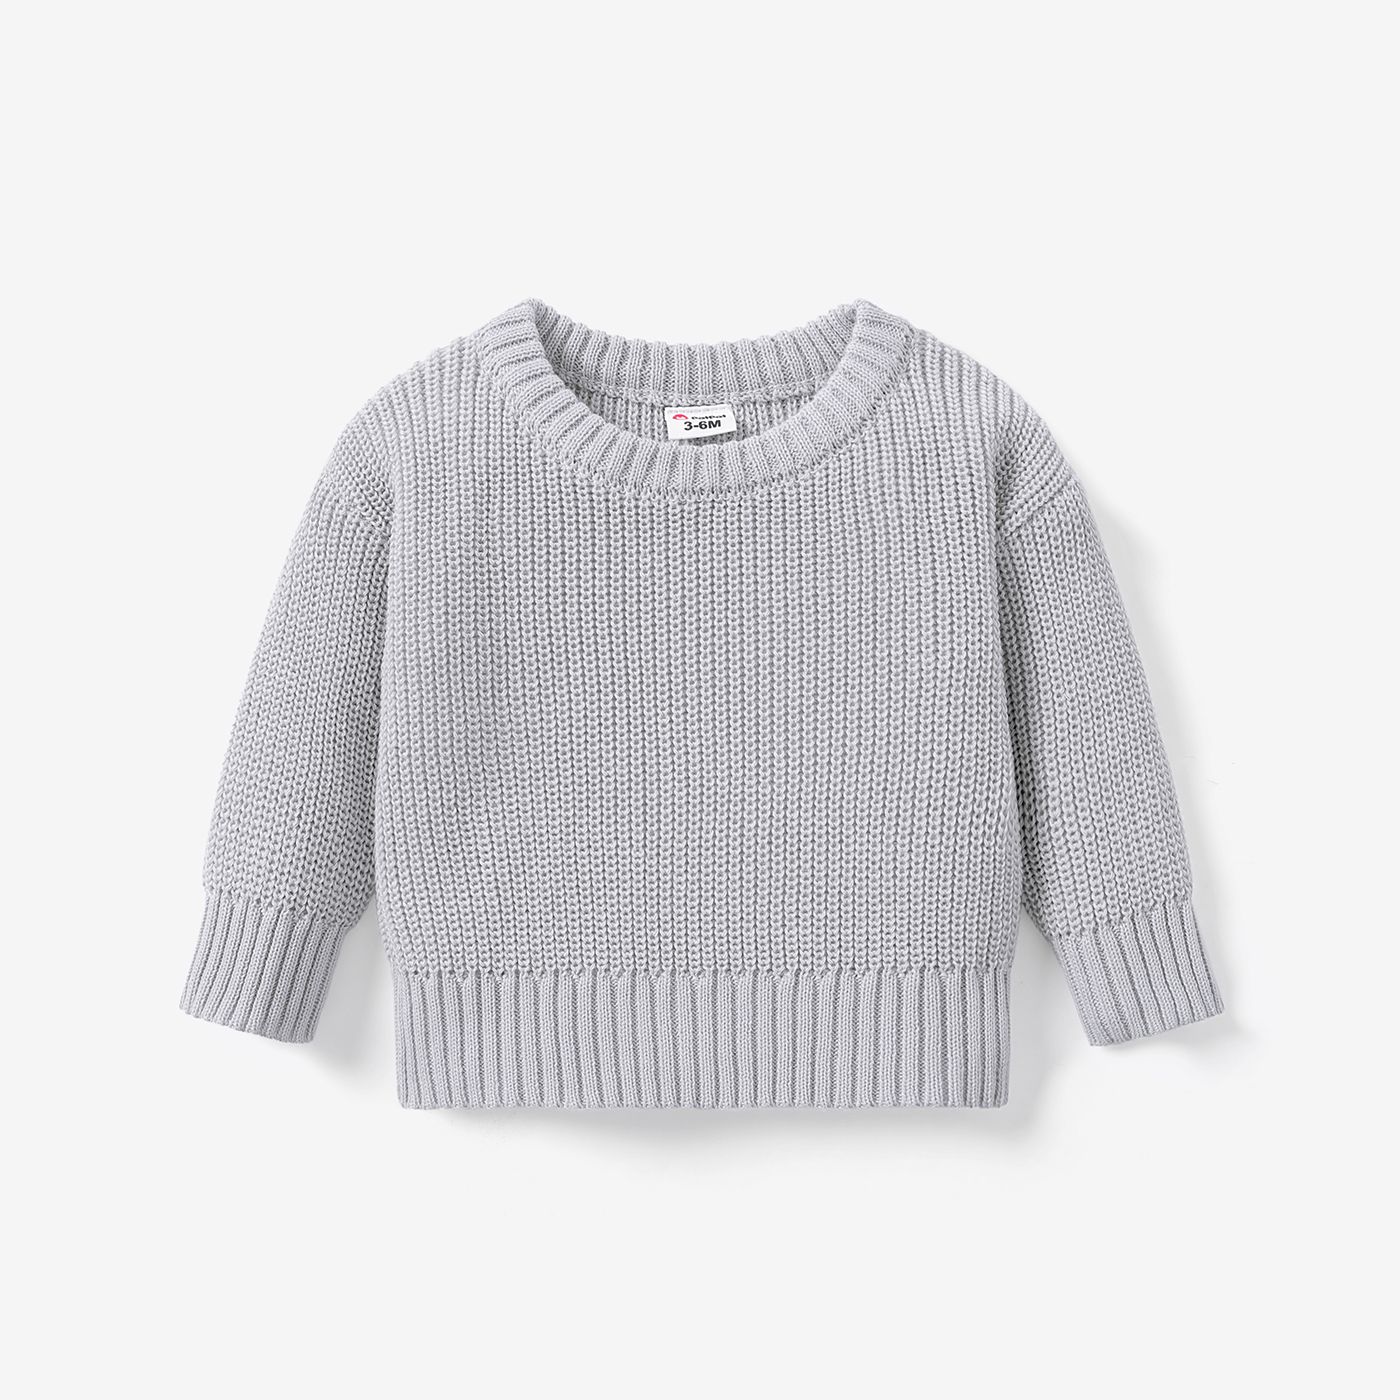 2pcs Baby Boy Casual Solid Sweater/Waistcoat/Pants/Bandana/Shoes/Cap